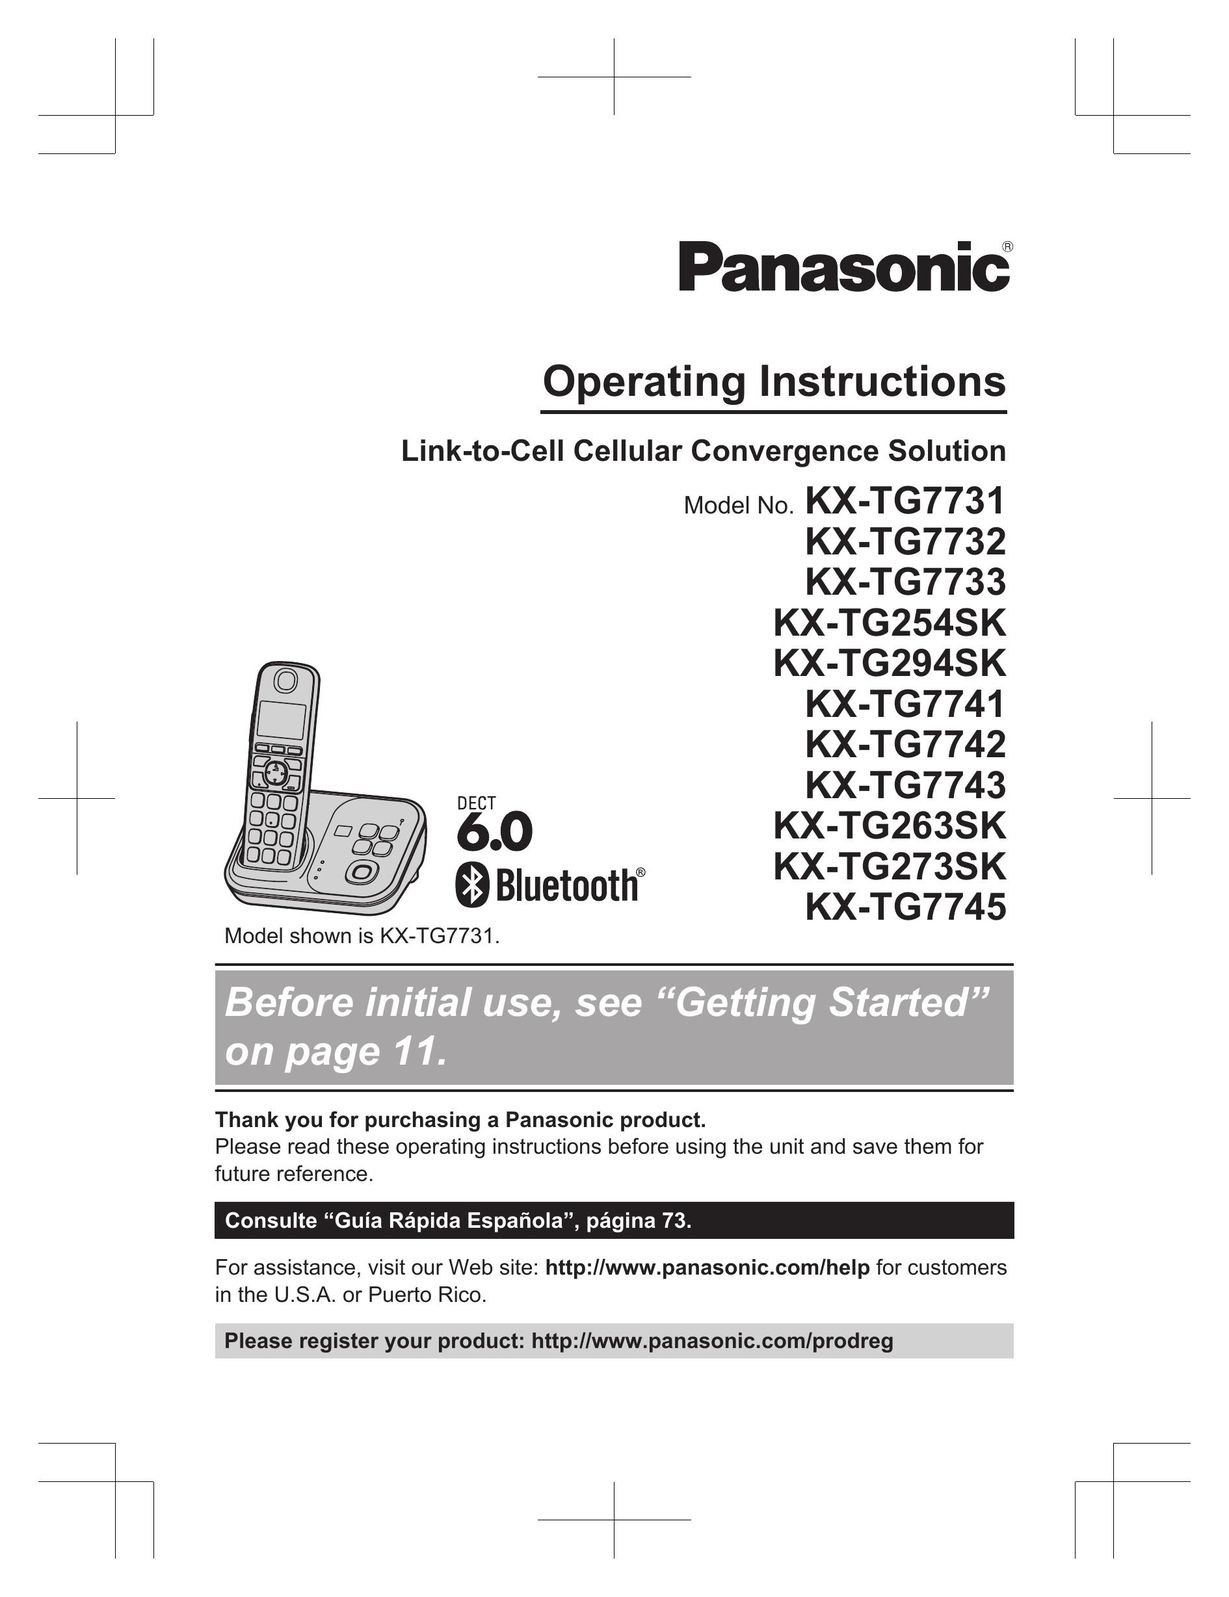 Panasonic KX-TG294SK Carrying Case User Manual